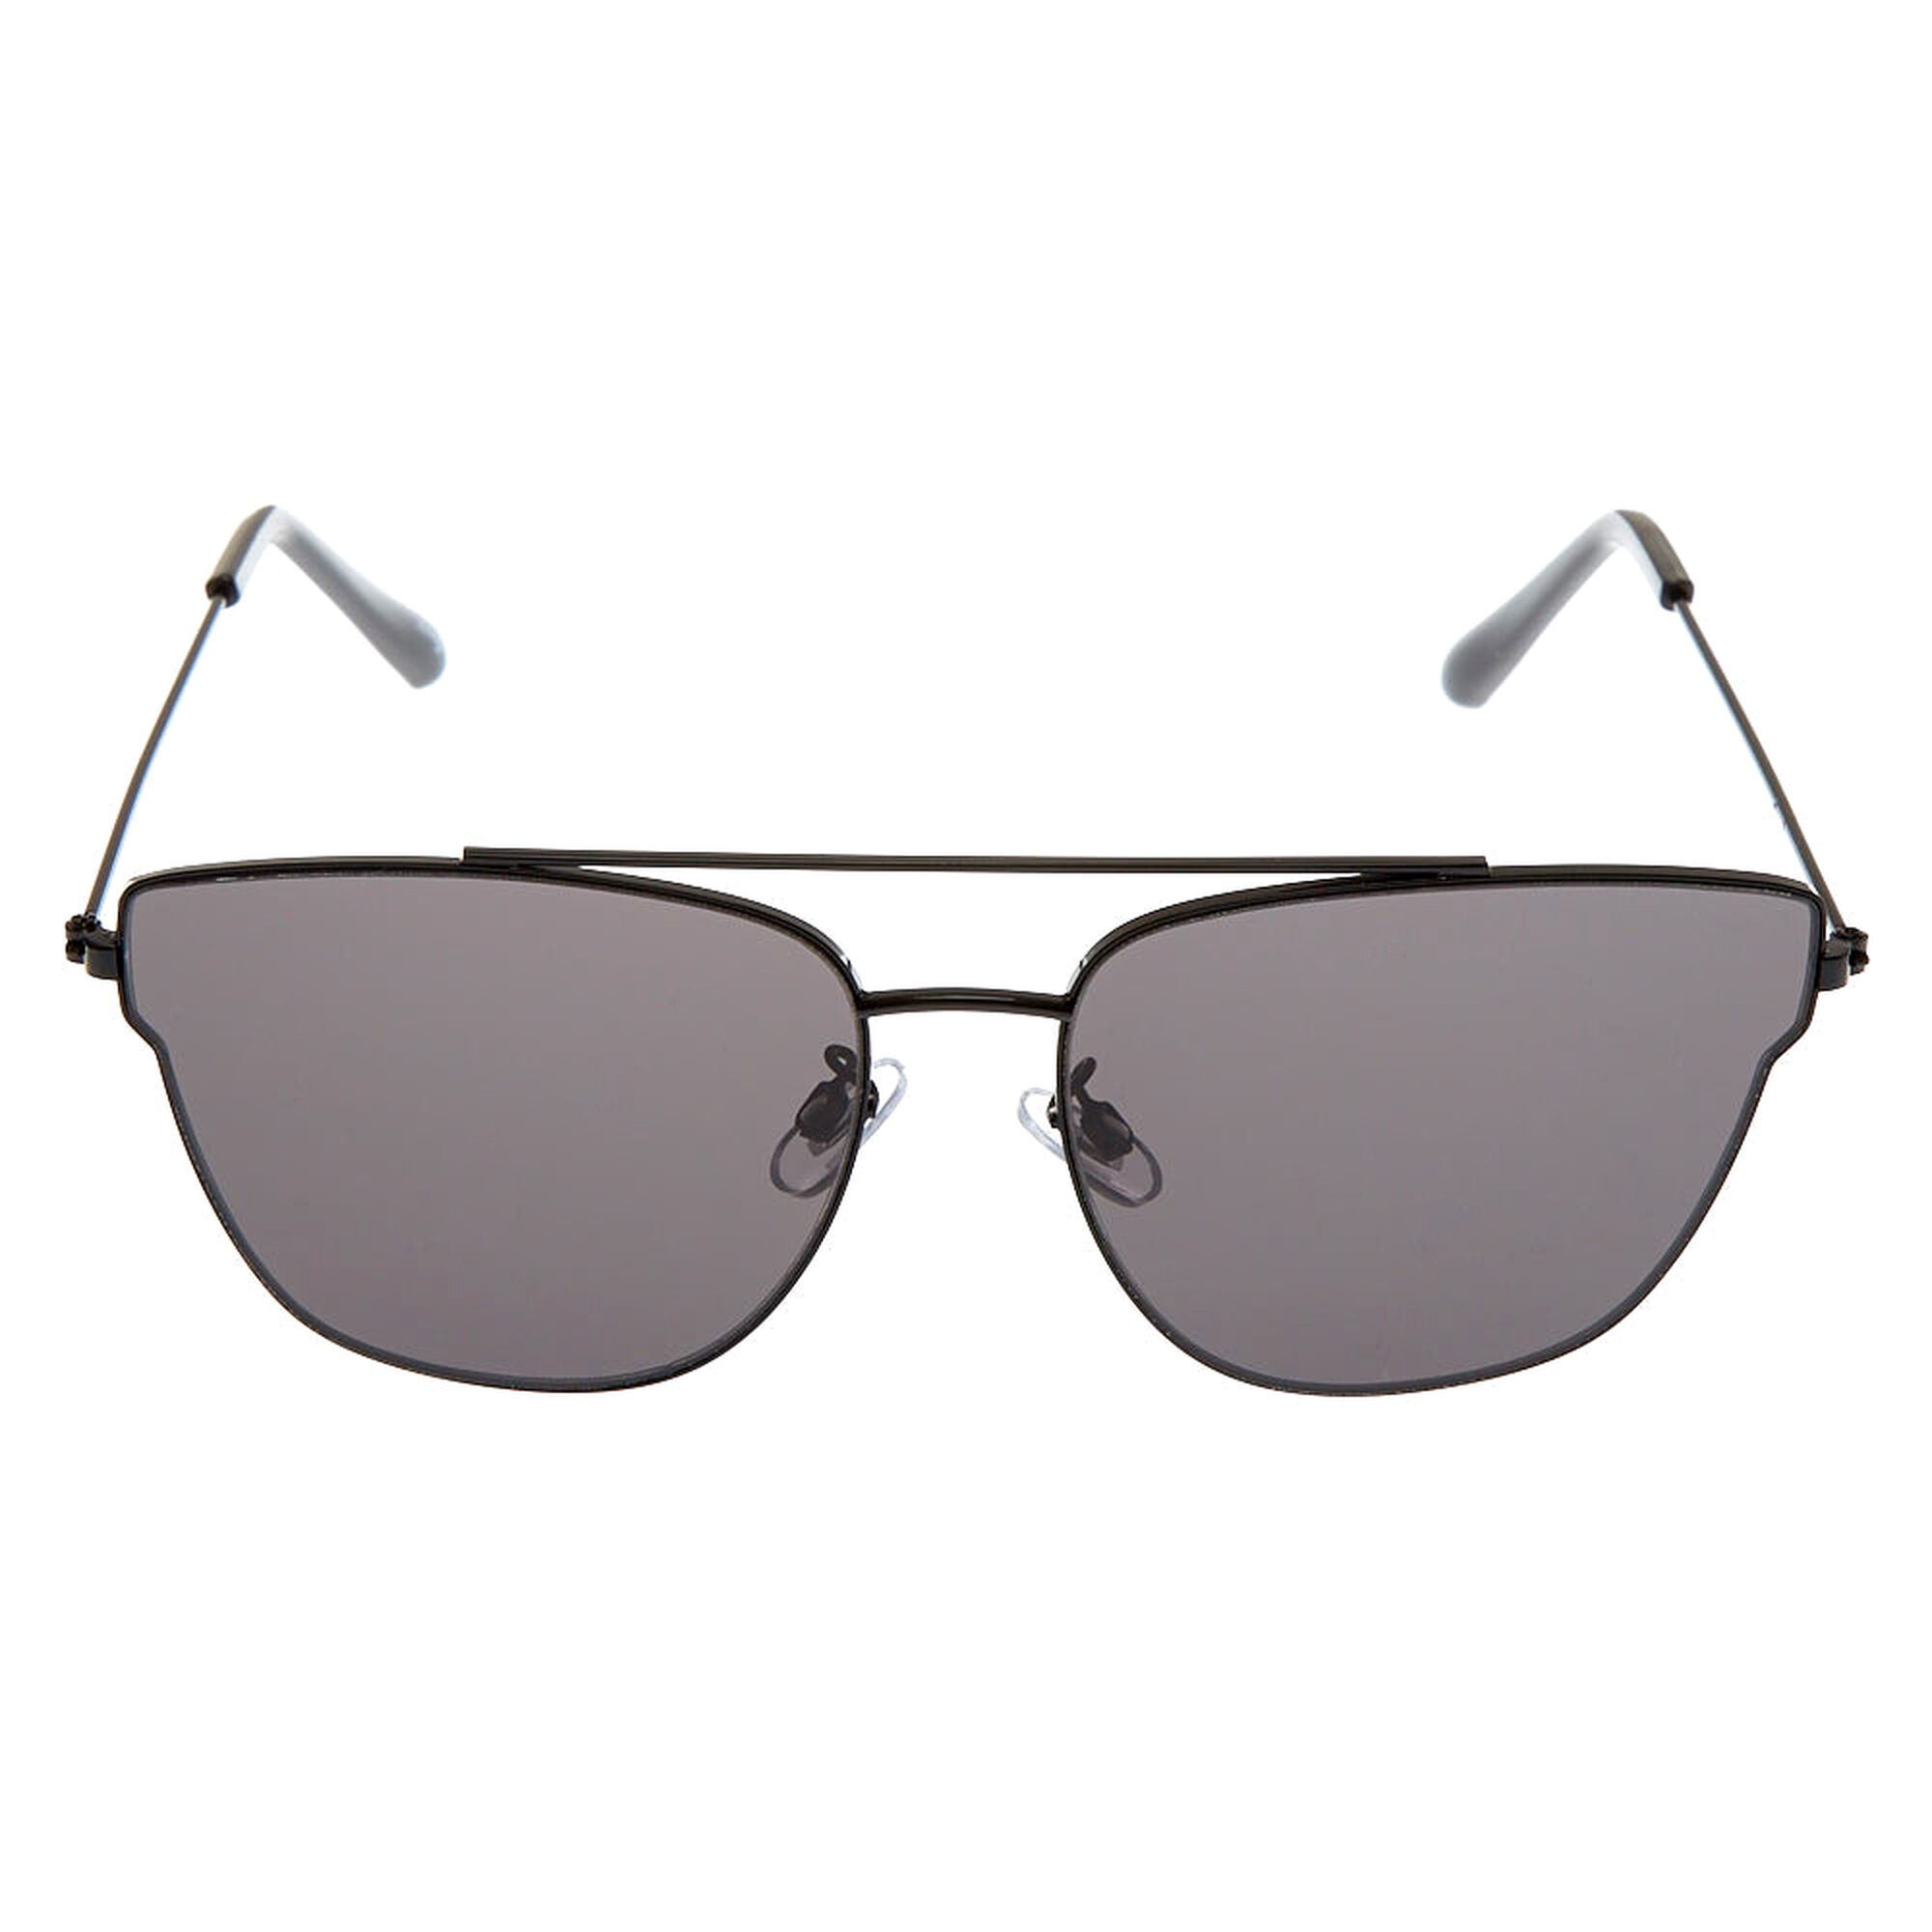 Black Mirrored Aviator Sunglasses | Icing US